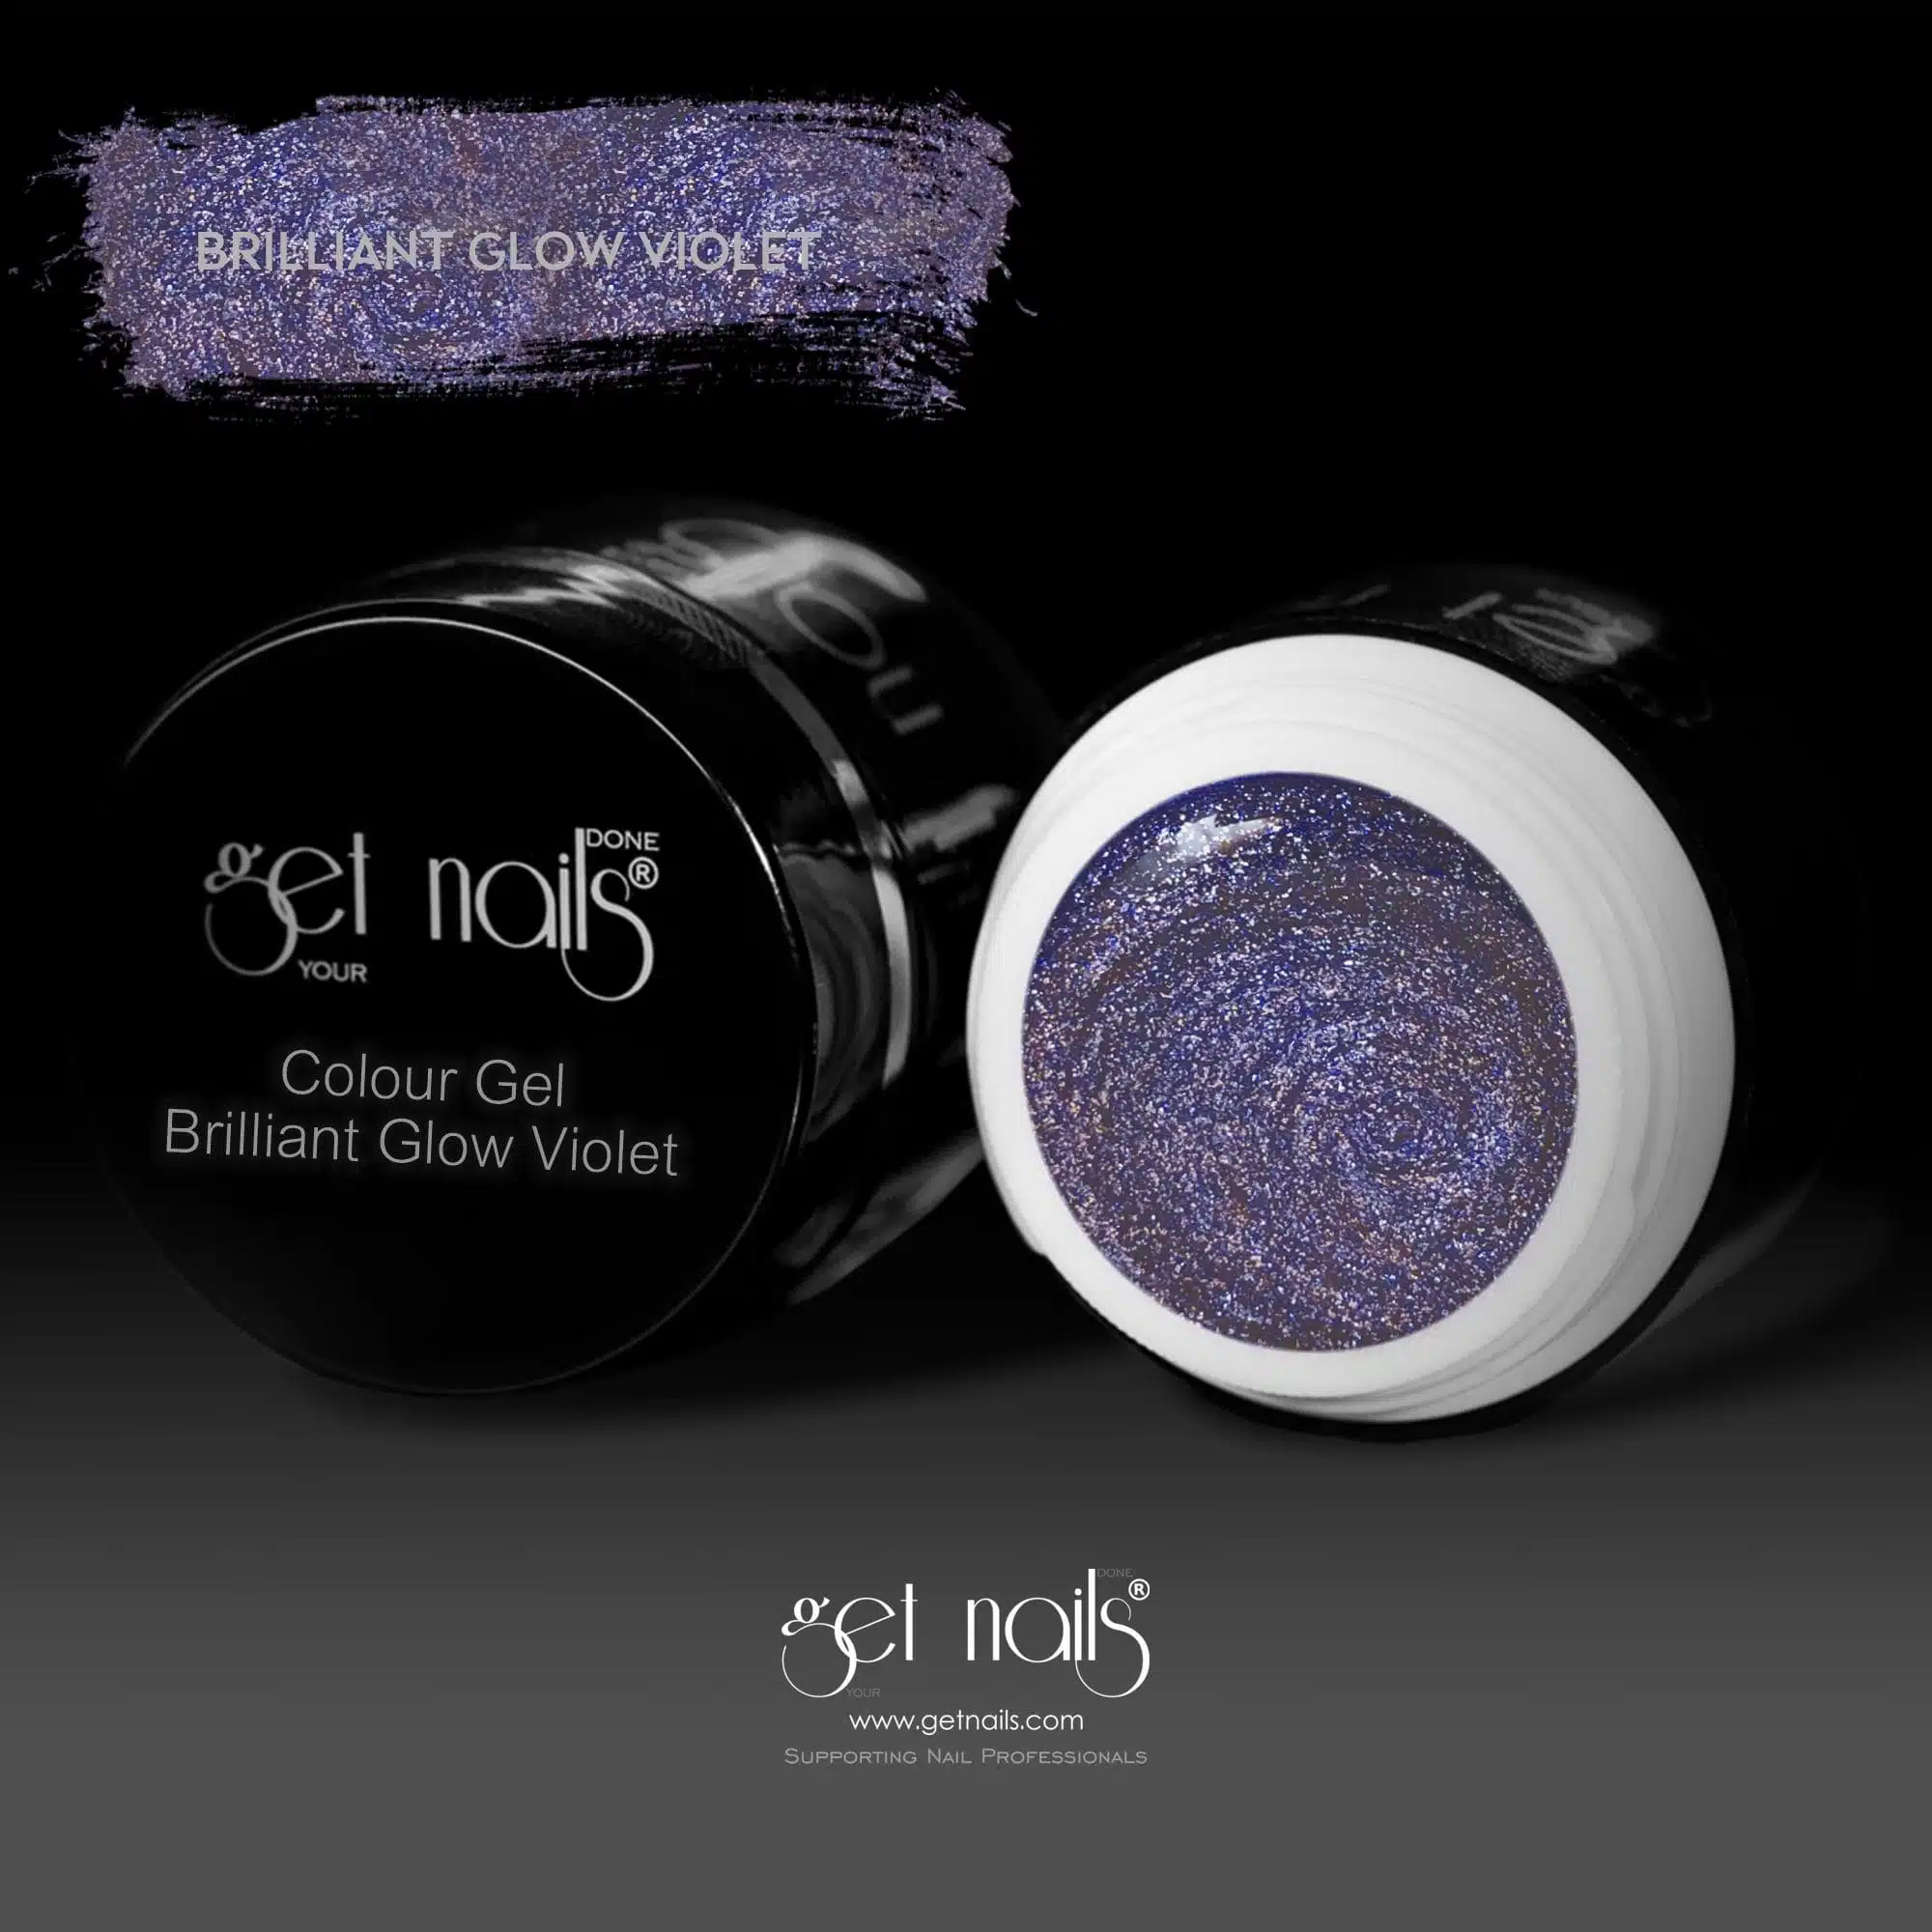 Get Nails Austria - Gel colorato Brilliant Glow Violet 5g